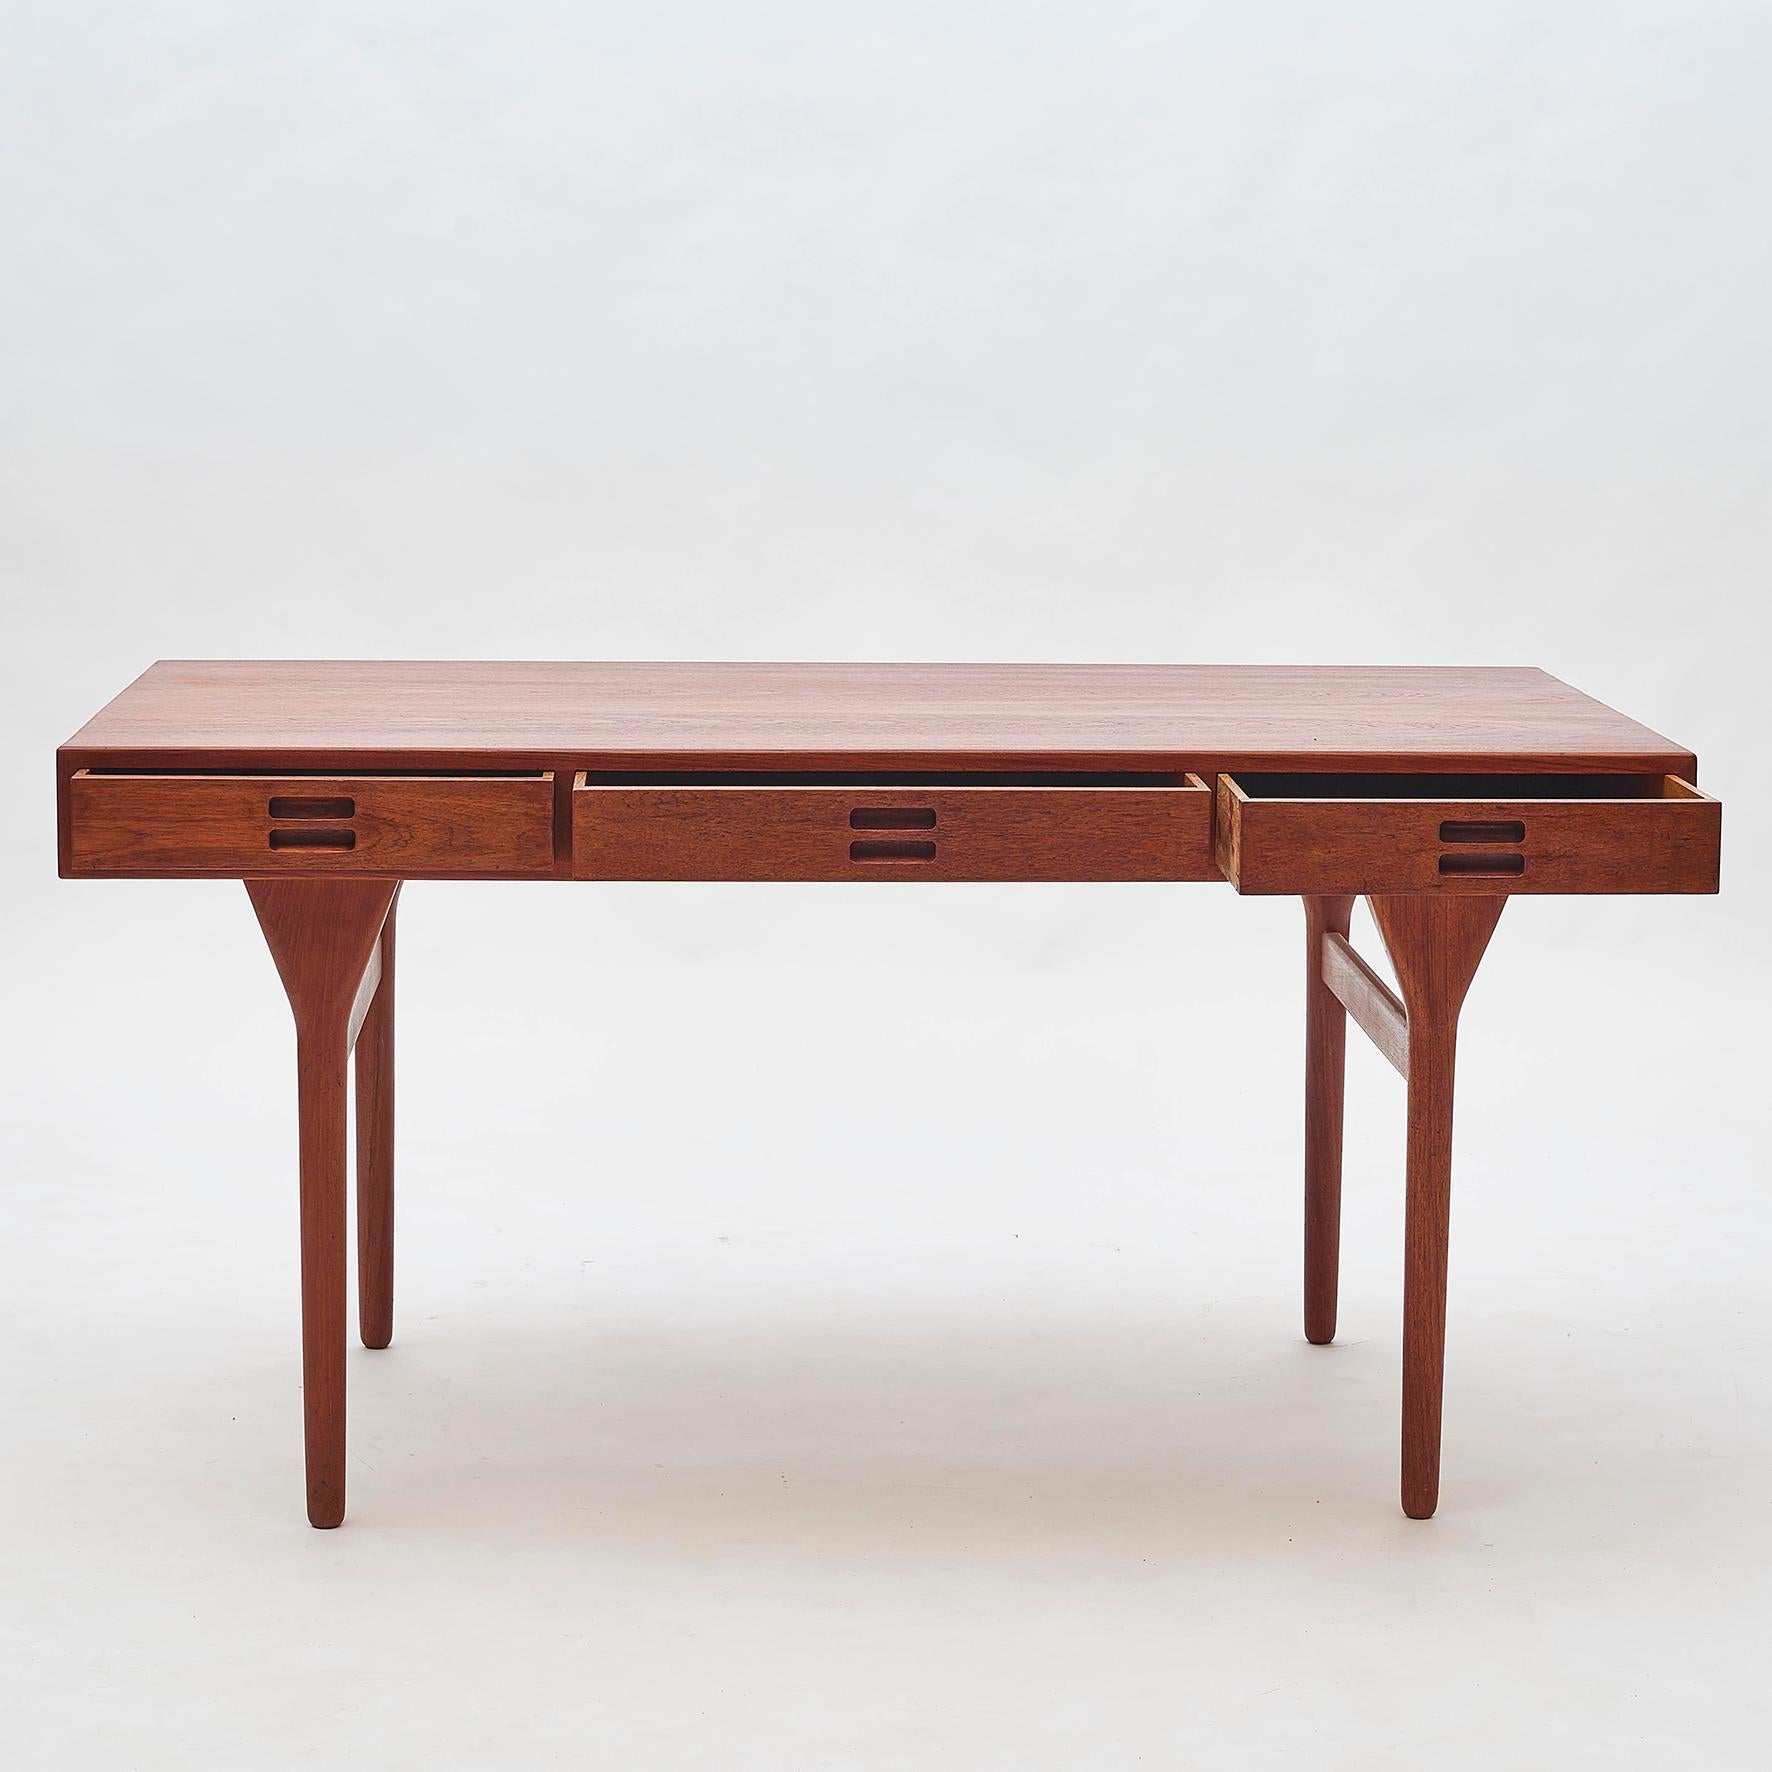 Desk by Danish designer Nanna Ditzel, 1955-1960, model ND93. Fine lines and robust structure in teak with 3 deep drawers. Manufactured by Søren Willadsen, Vejen.